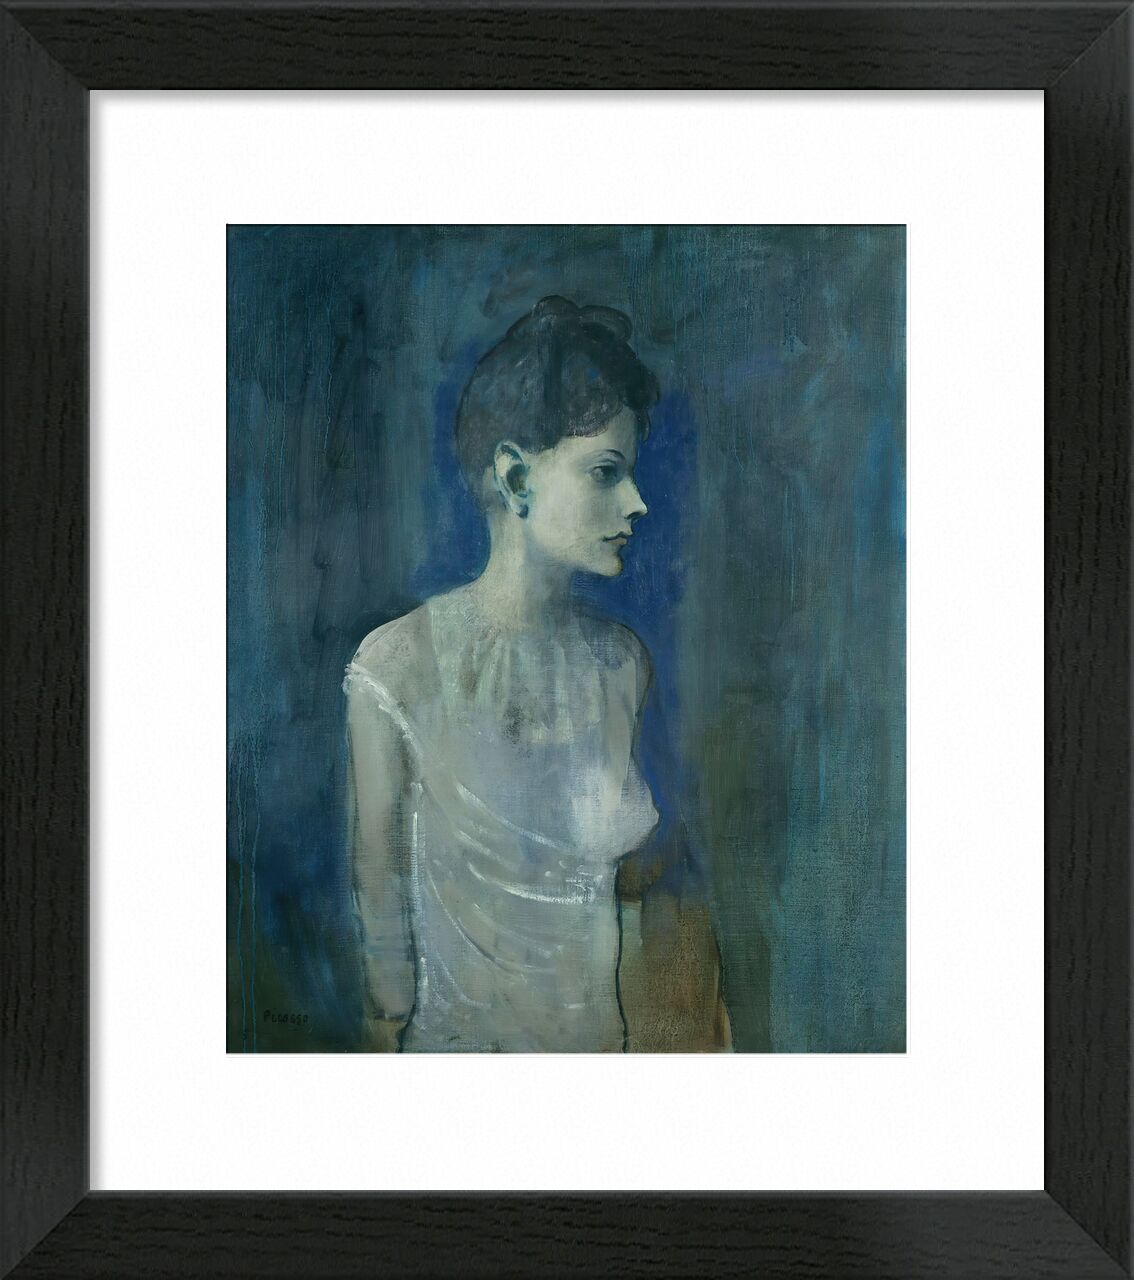 Girl in a Chemise - Picasso desde Bellas artes, Prodi Art, picasso, pintura, niña, desnudo, desnudo